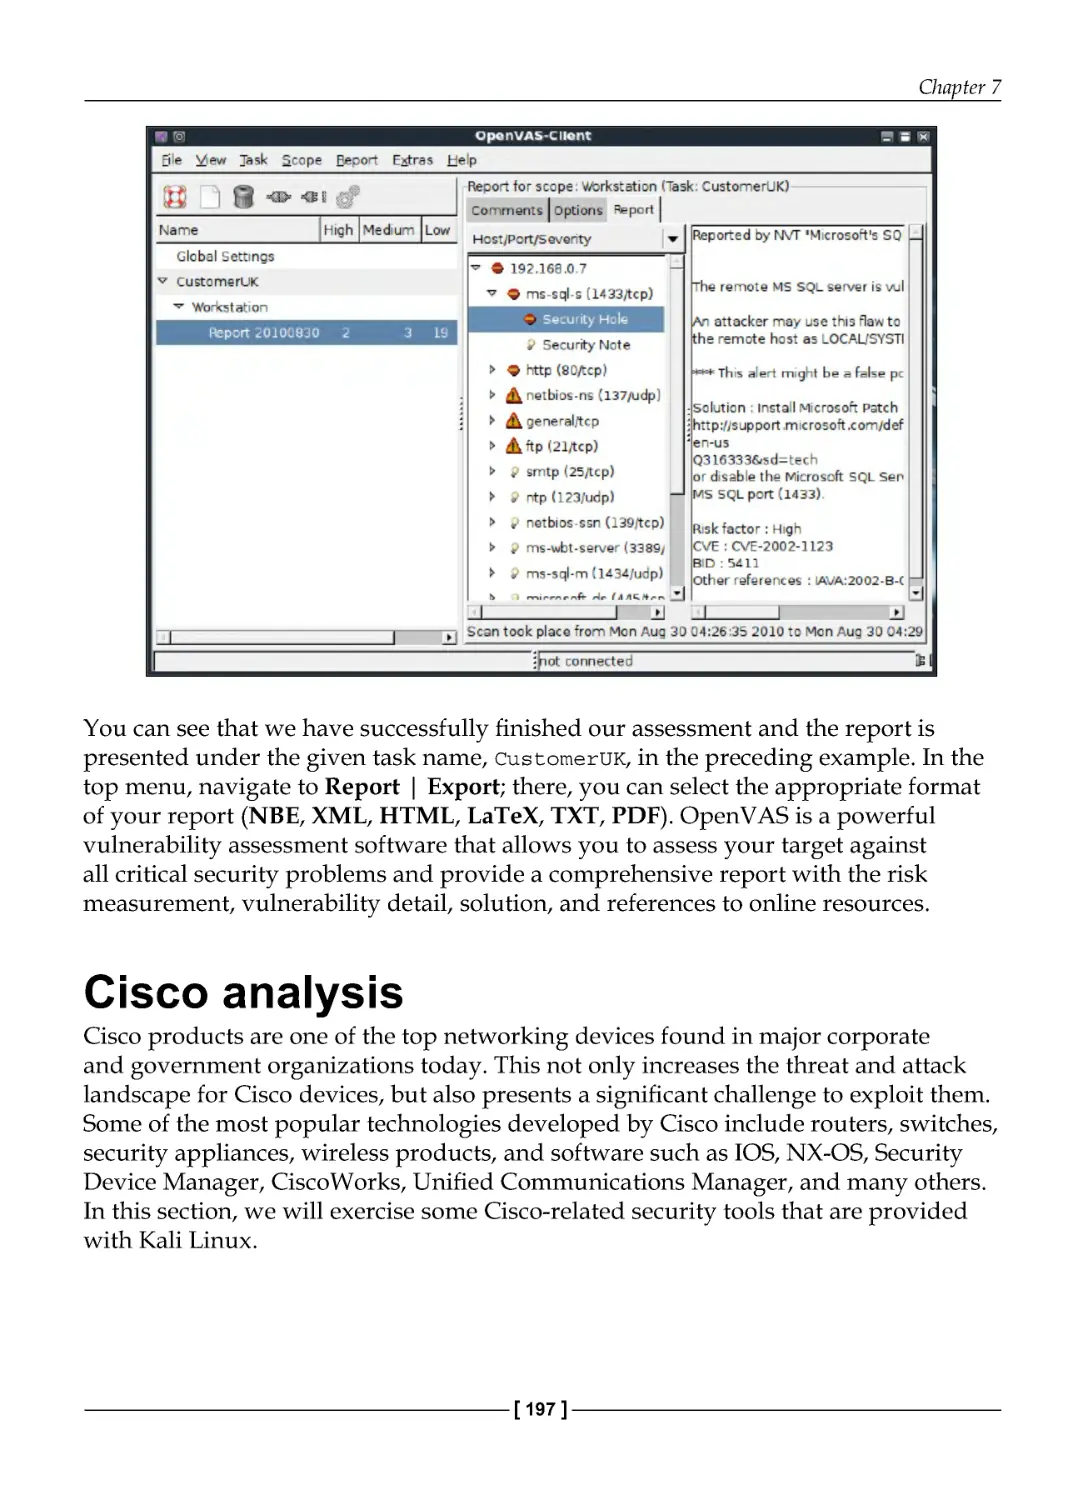 Cisco analysis